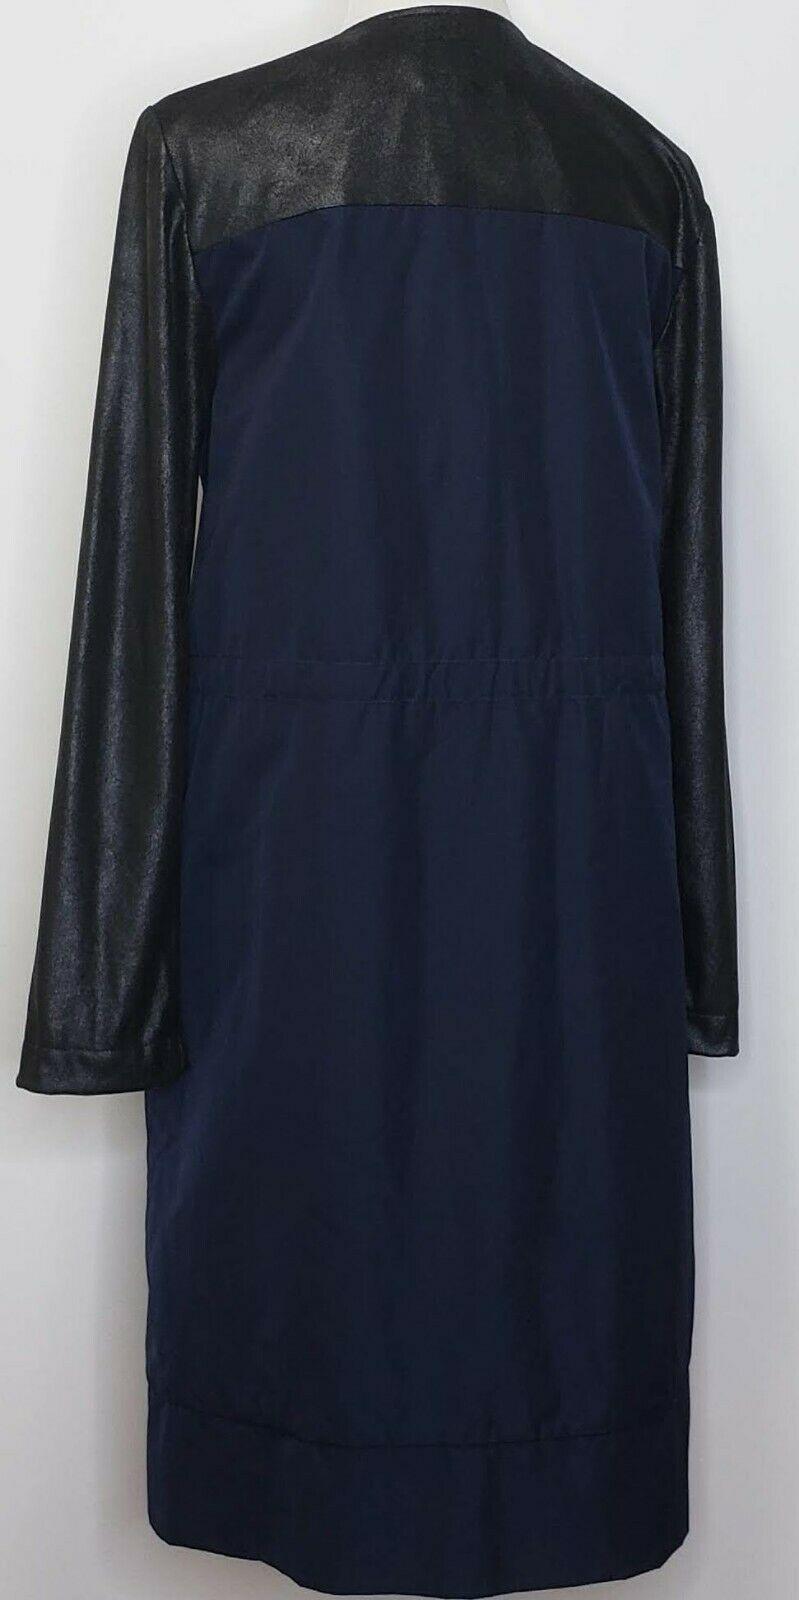 DKNY Women’s Black Faux Leather Sleeves Navy Walker Fashion Long Oversize Coat S - SVNYFancy